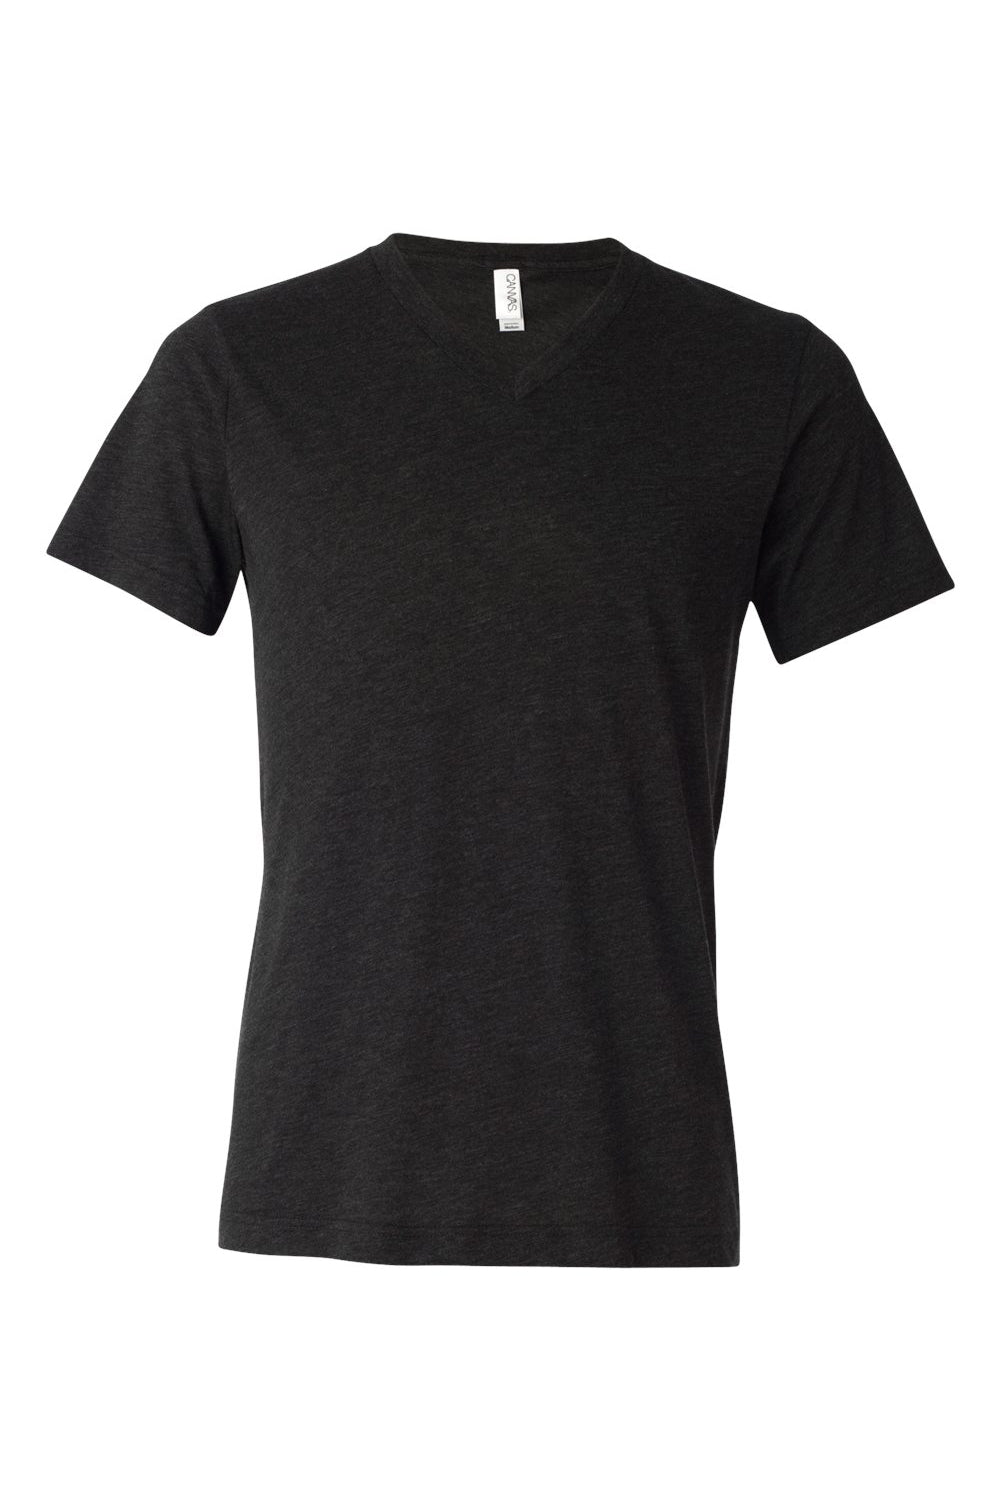 Bella + Canvas BC3415/3415C/3415 Mens Short Sleeve V-Neck T-Shirt Charcoal Black Flat Front